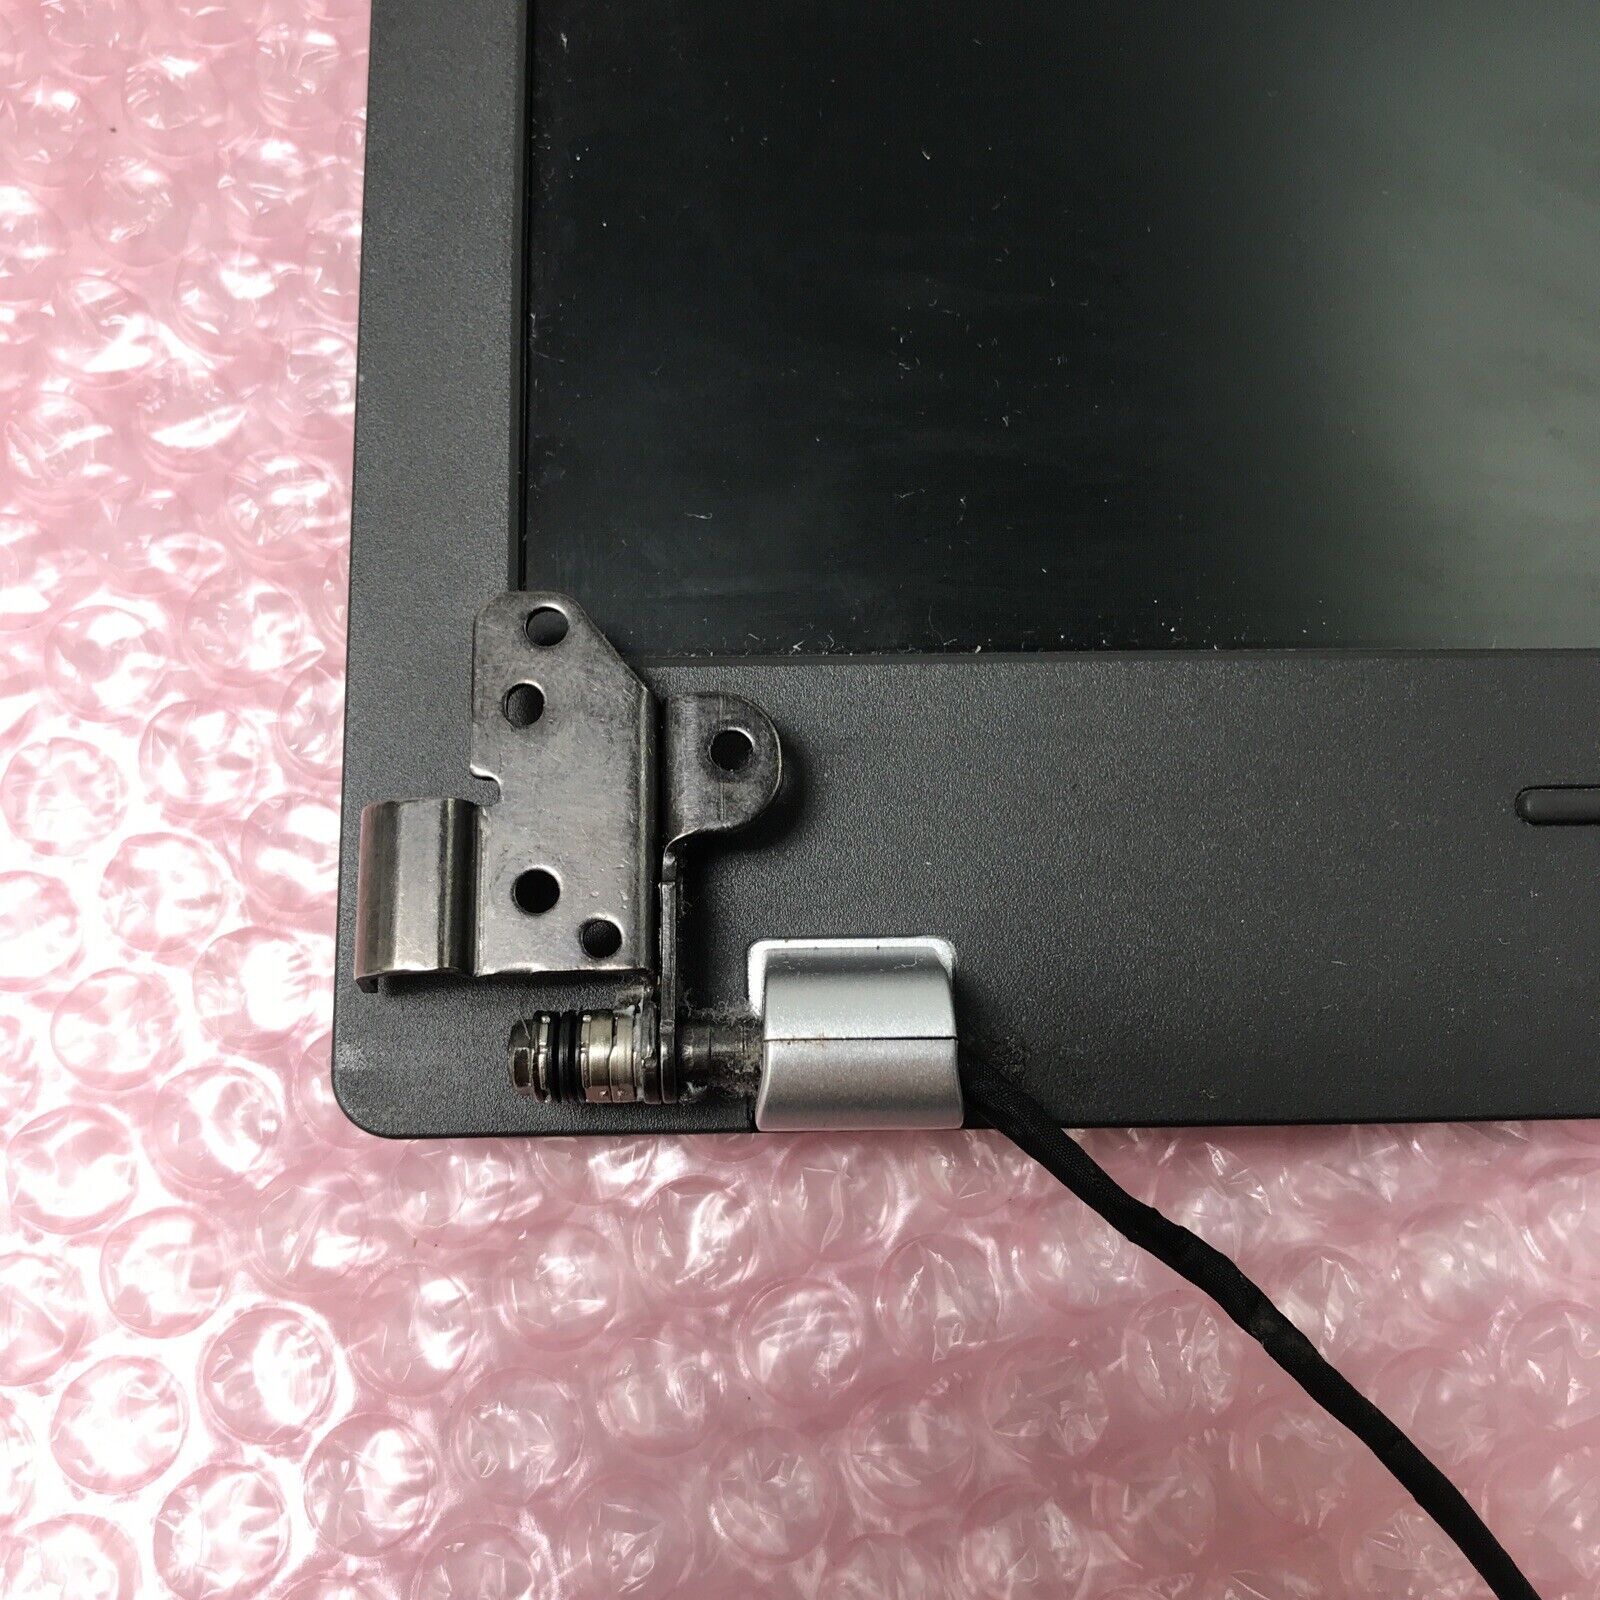 Lenovo ThinkPad E460 Screen (Tested and Working)